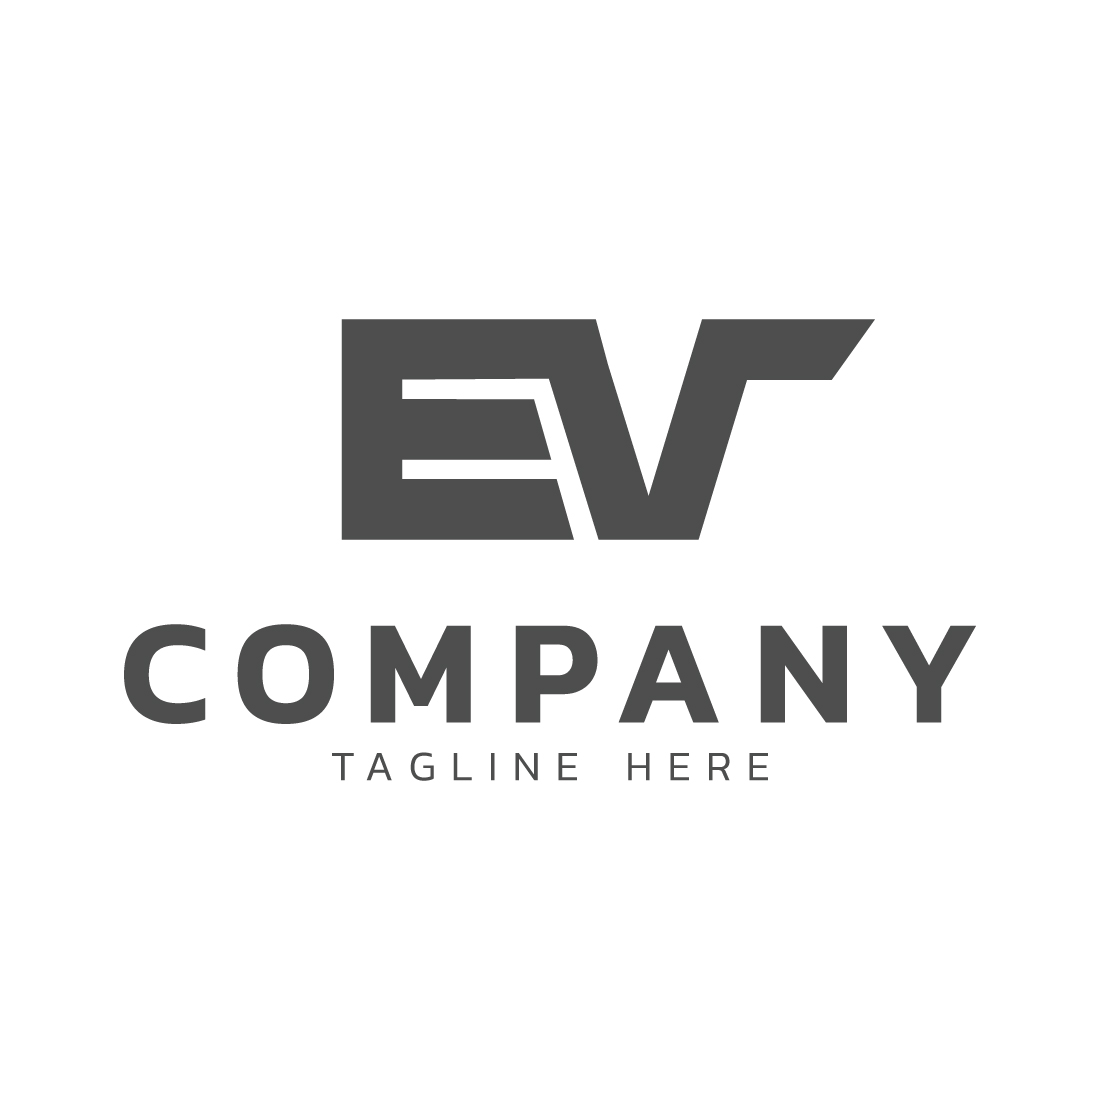 EV logo preview image.